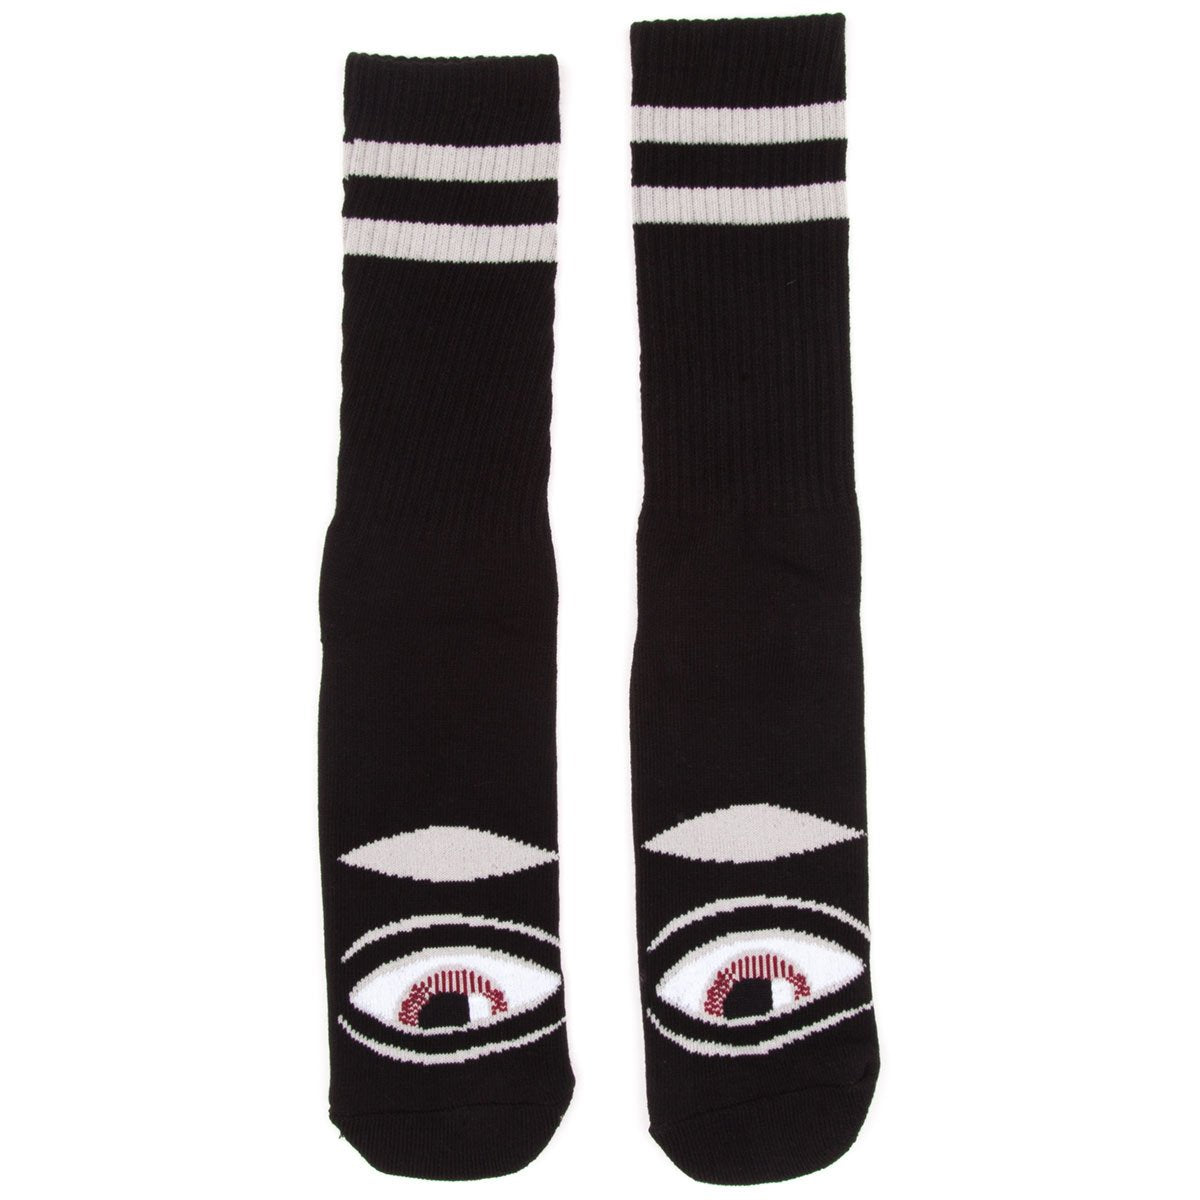 Toy Machine Sect Eye Socks - Black image 1